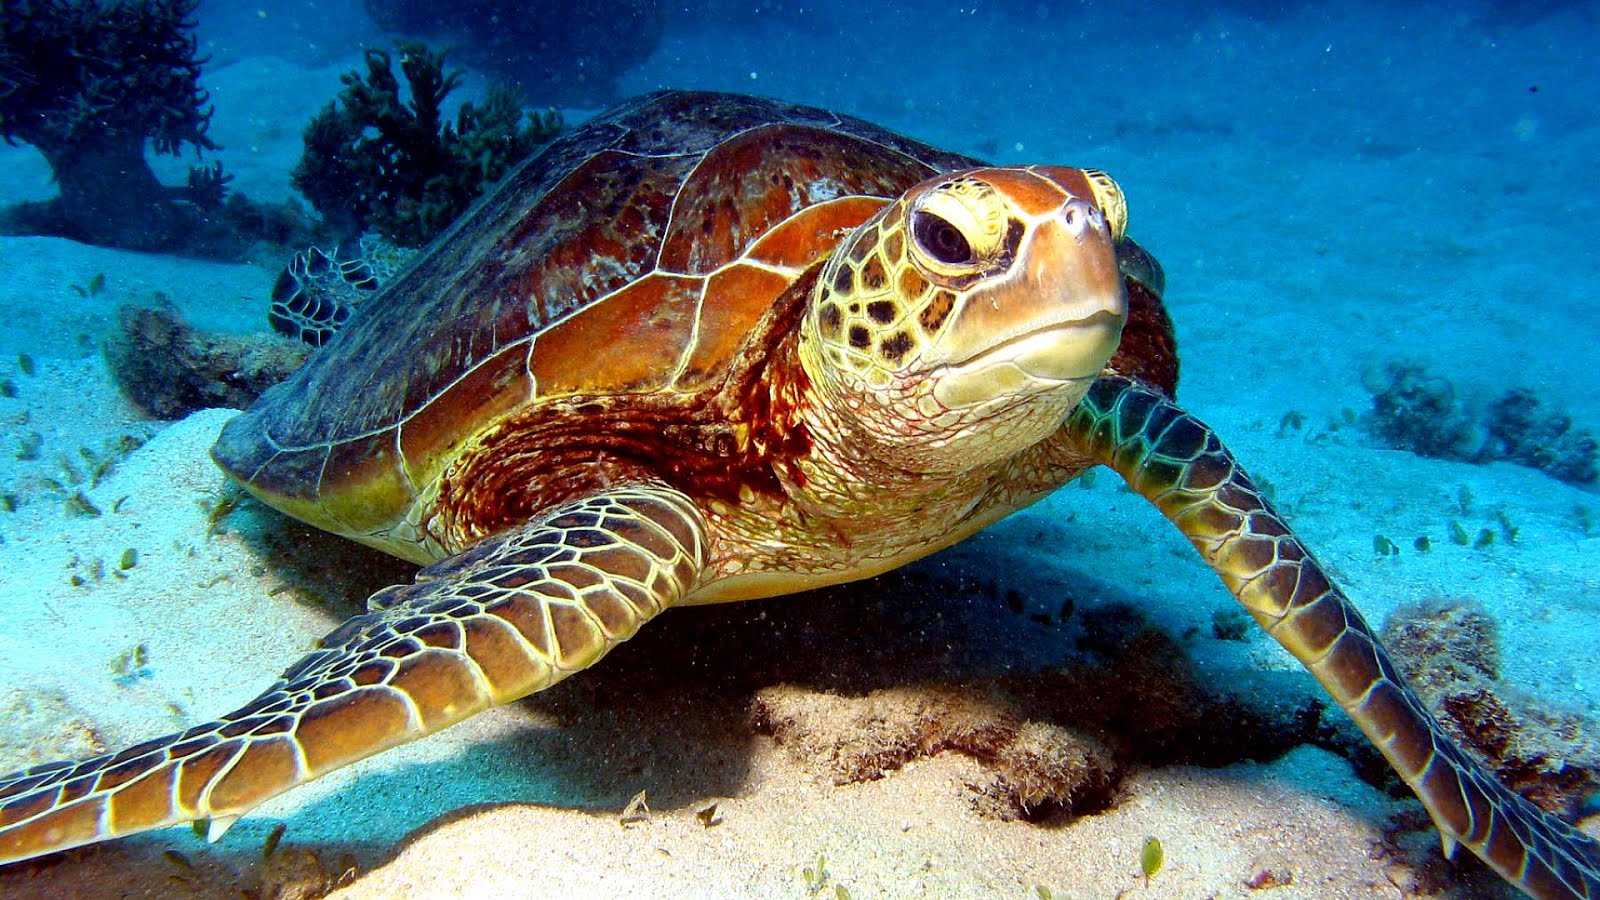 Sea Turtles Endangered Species - Danger Choices